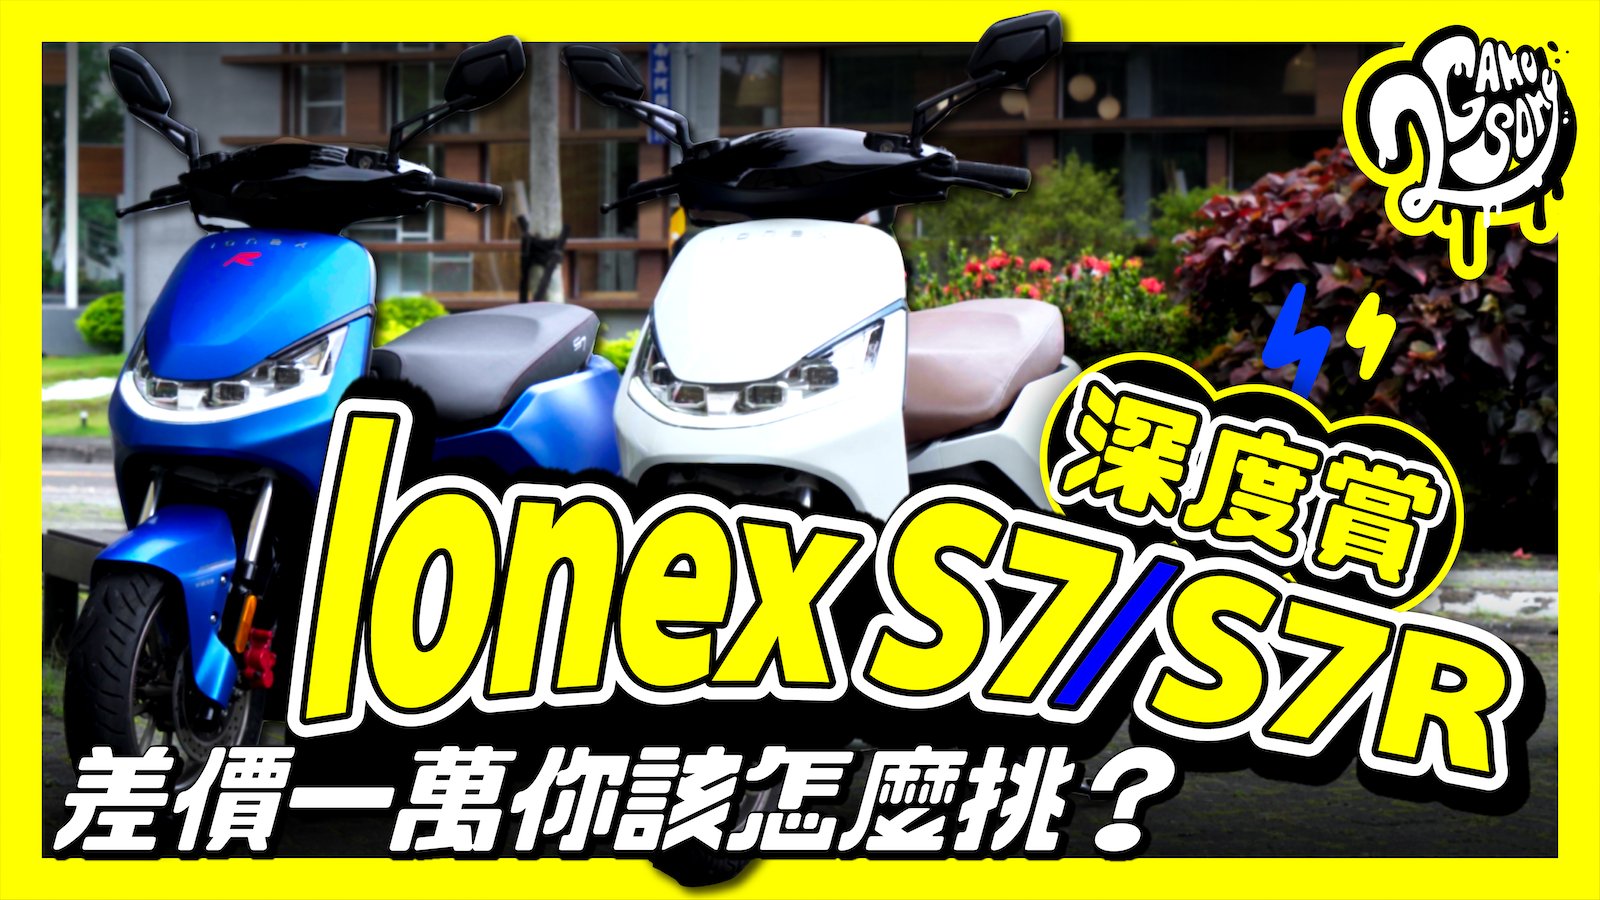 KYMCO Ionex S7 / S7R 深度賞｜差價一萬你該怎麼挑？